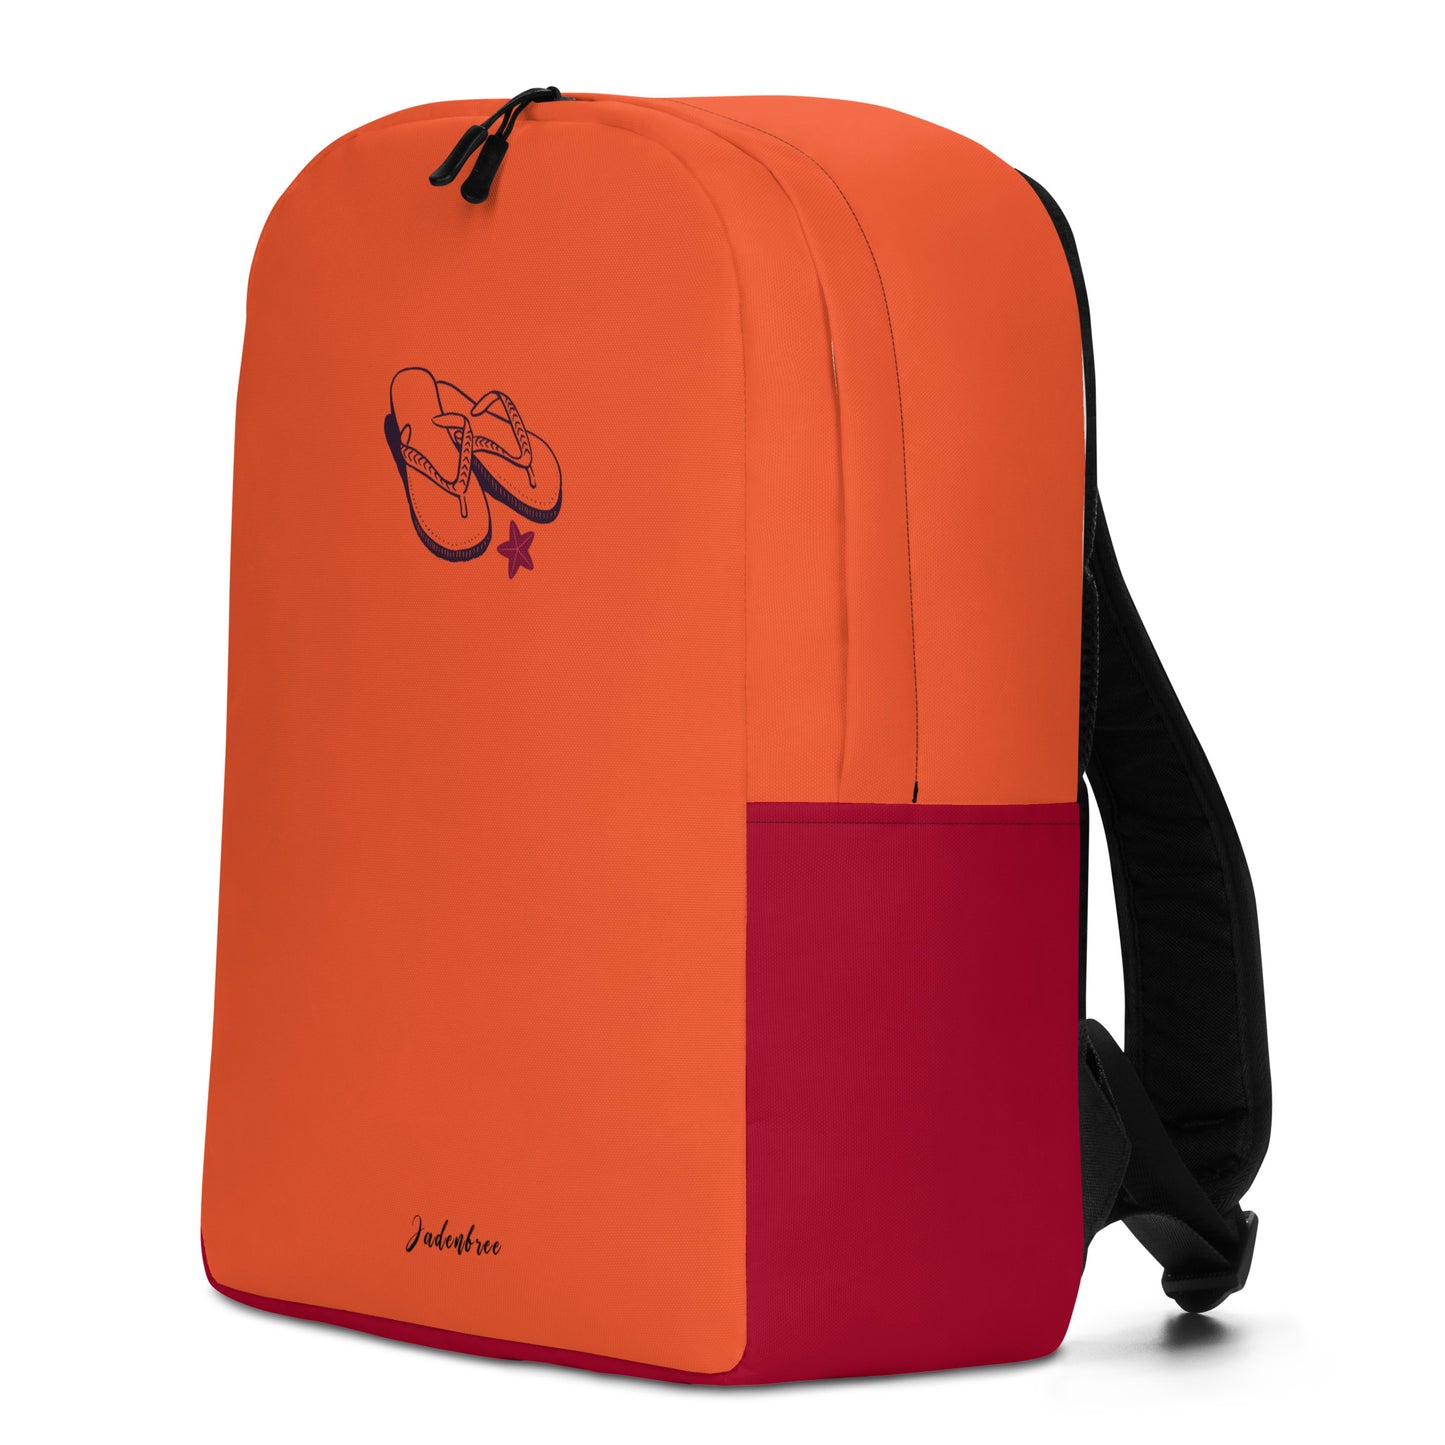 FlipFlop Explorer Minimalist Backpack